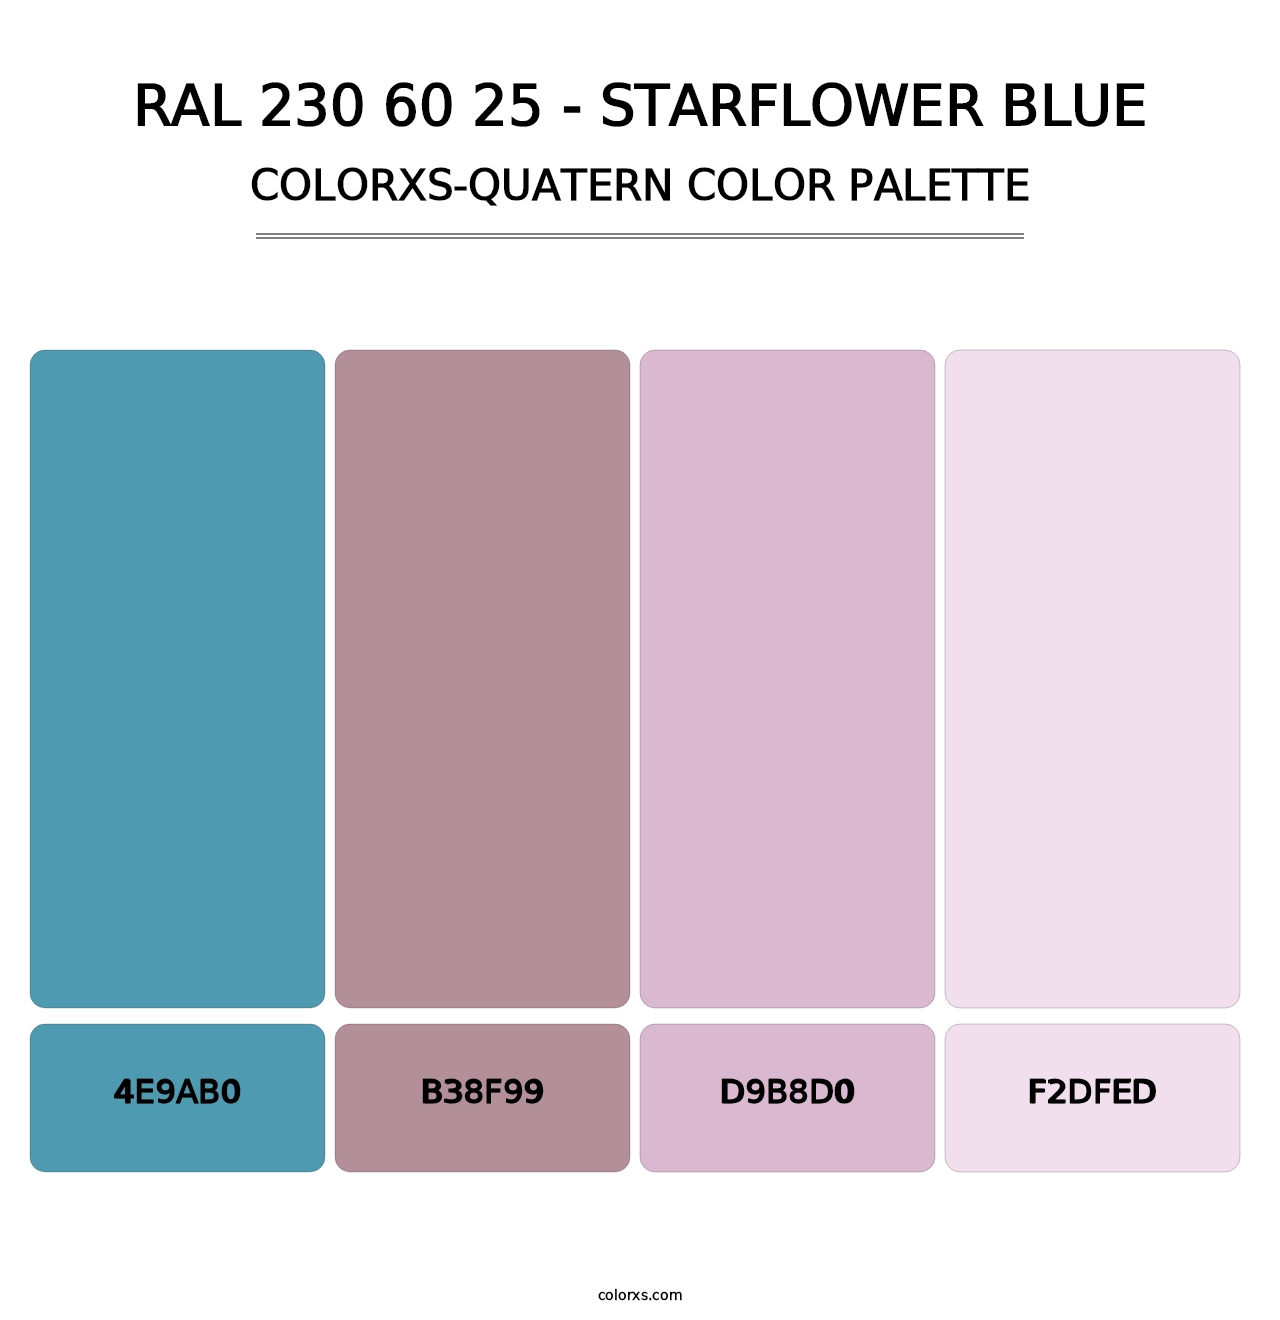 RAL 230 60 25 - Starflower Blue - Colorxs Quatern Palette